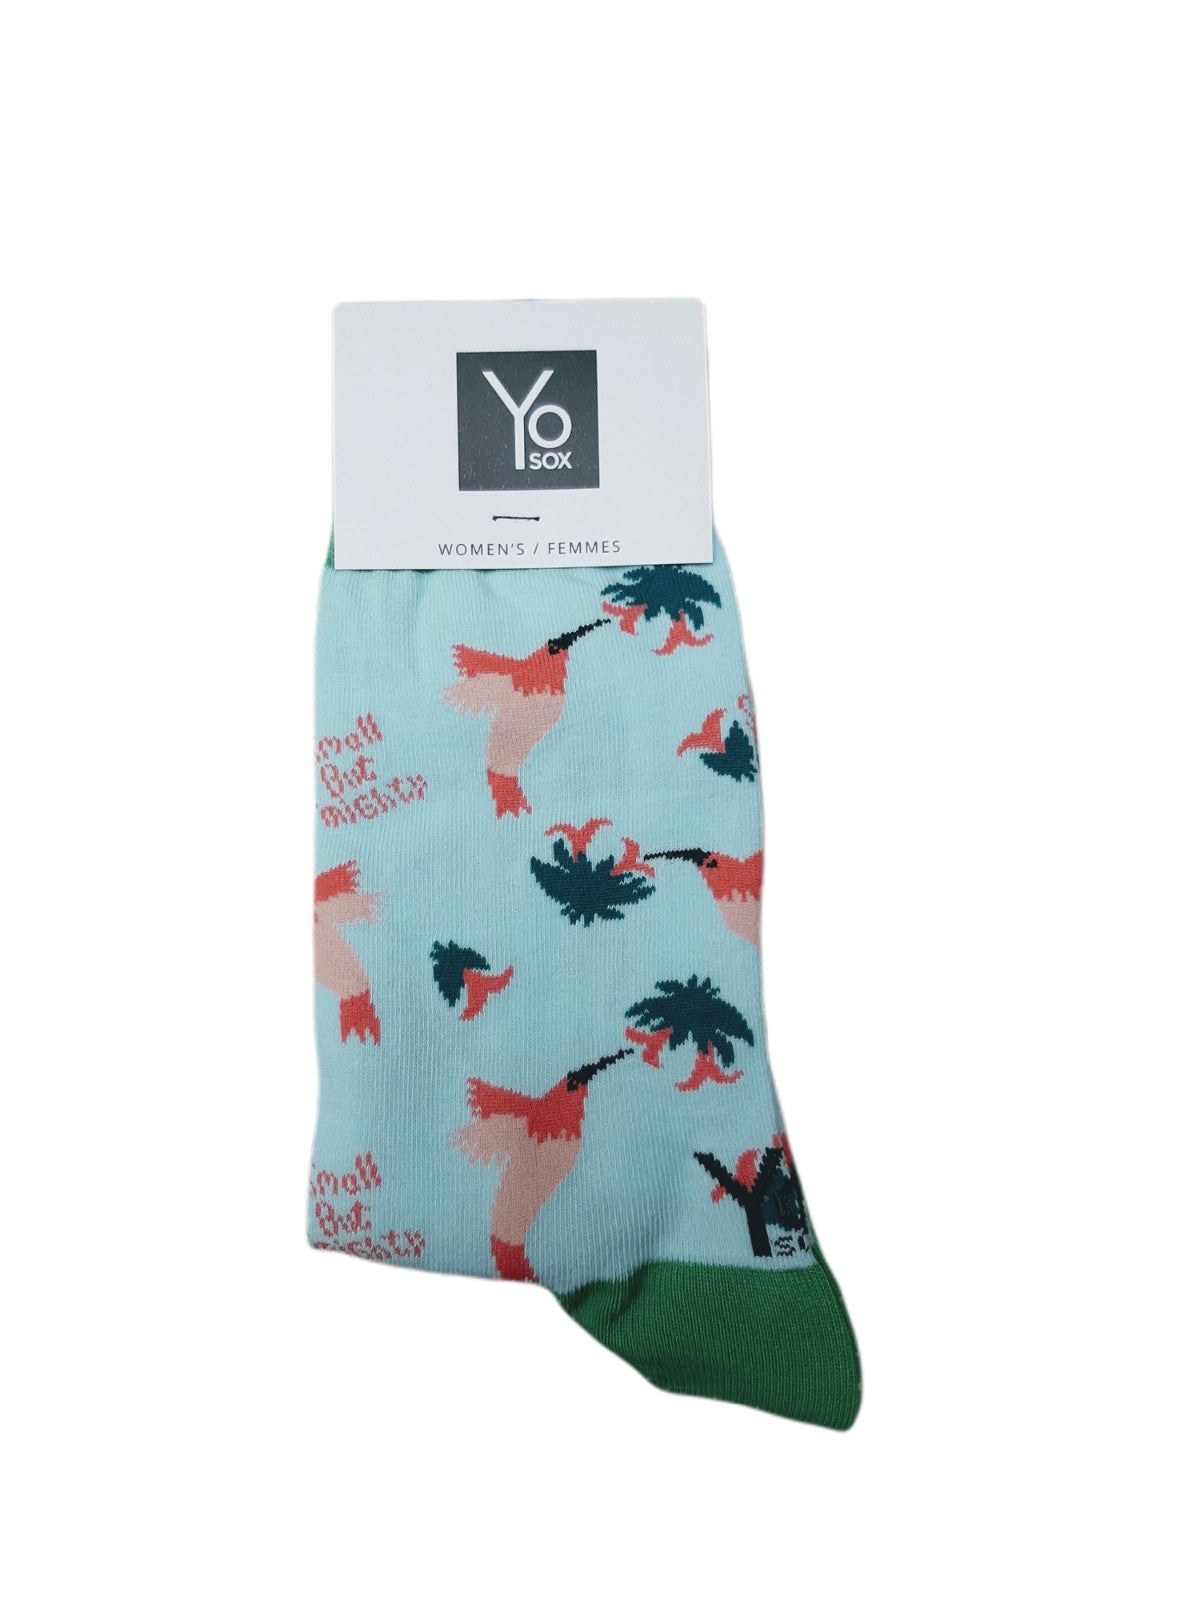 Yo Women's Socks - 19 Designs